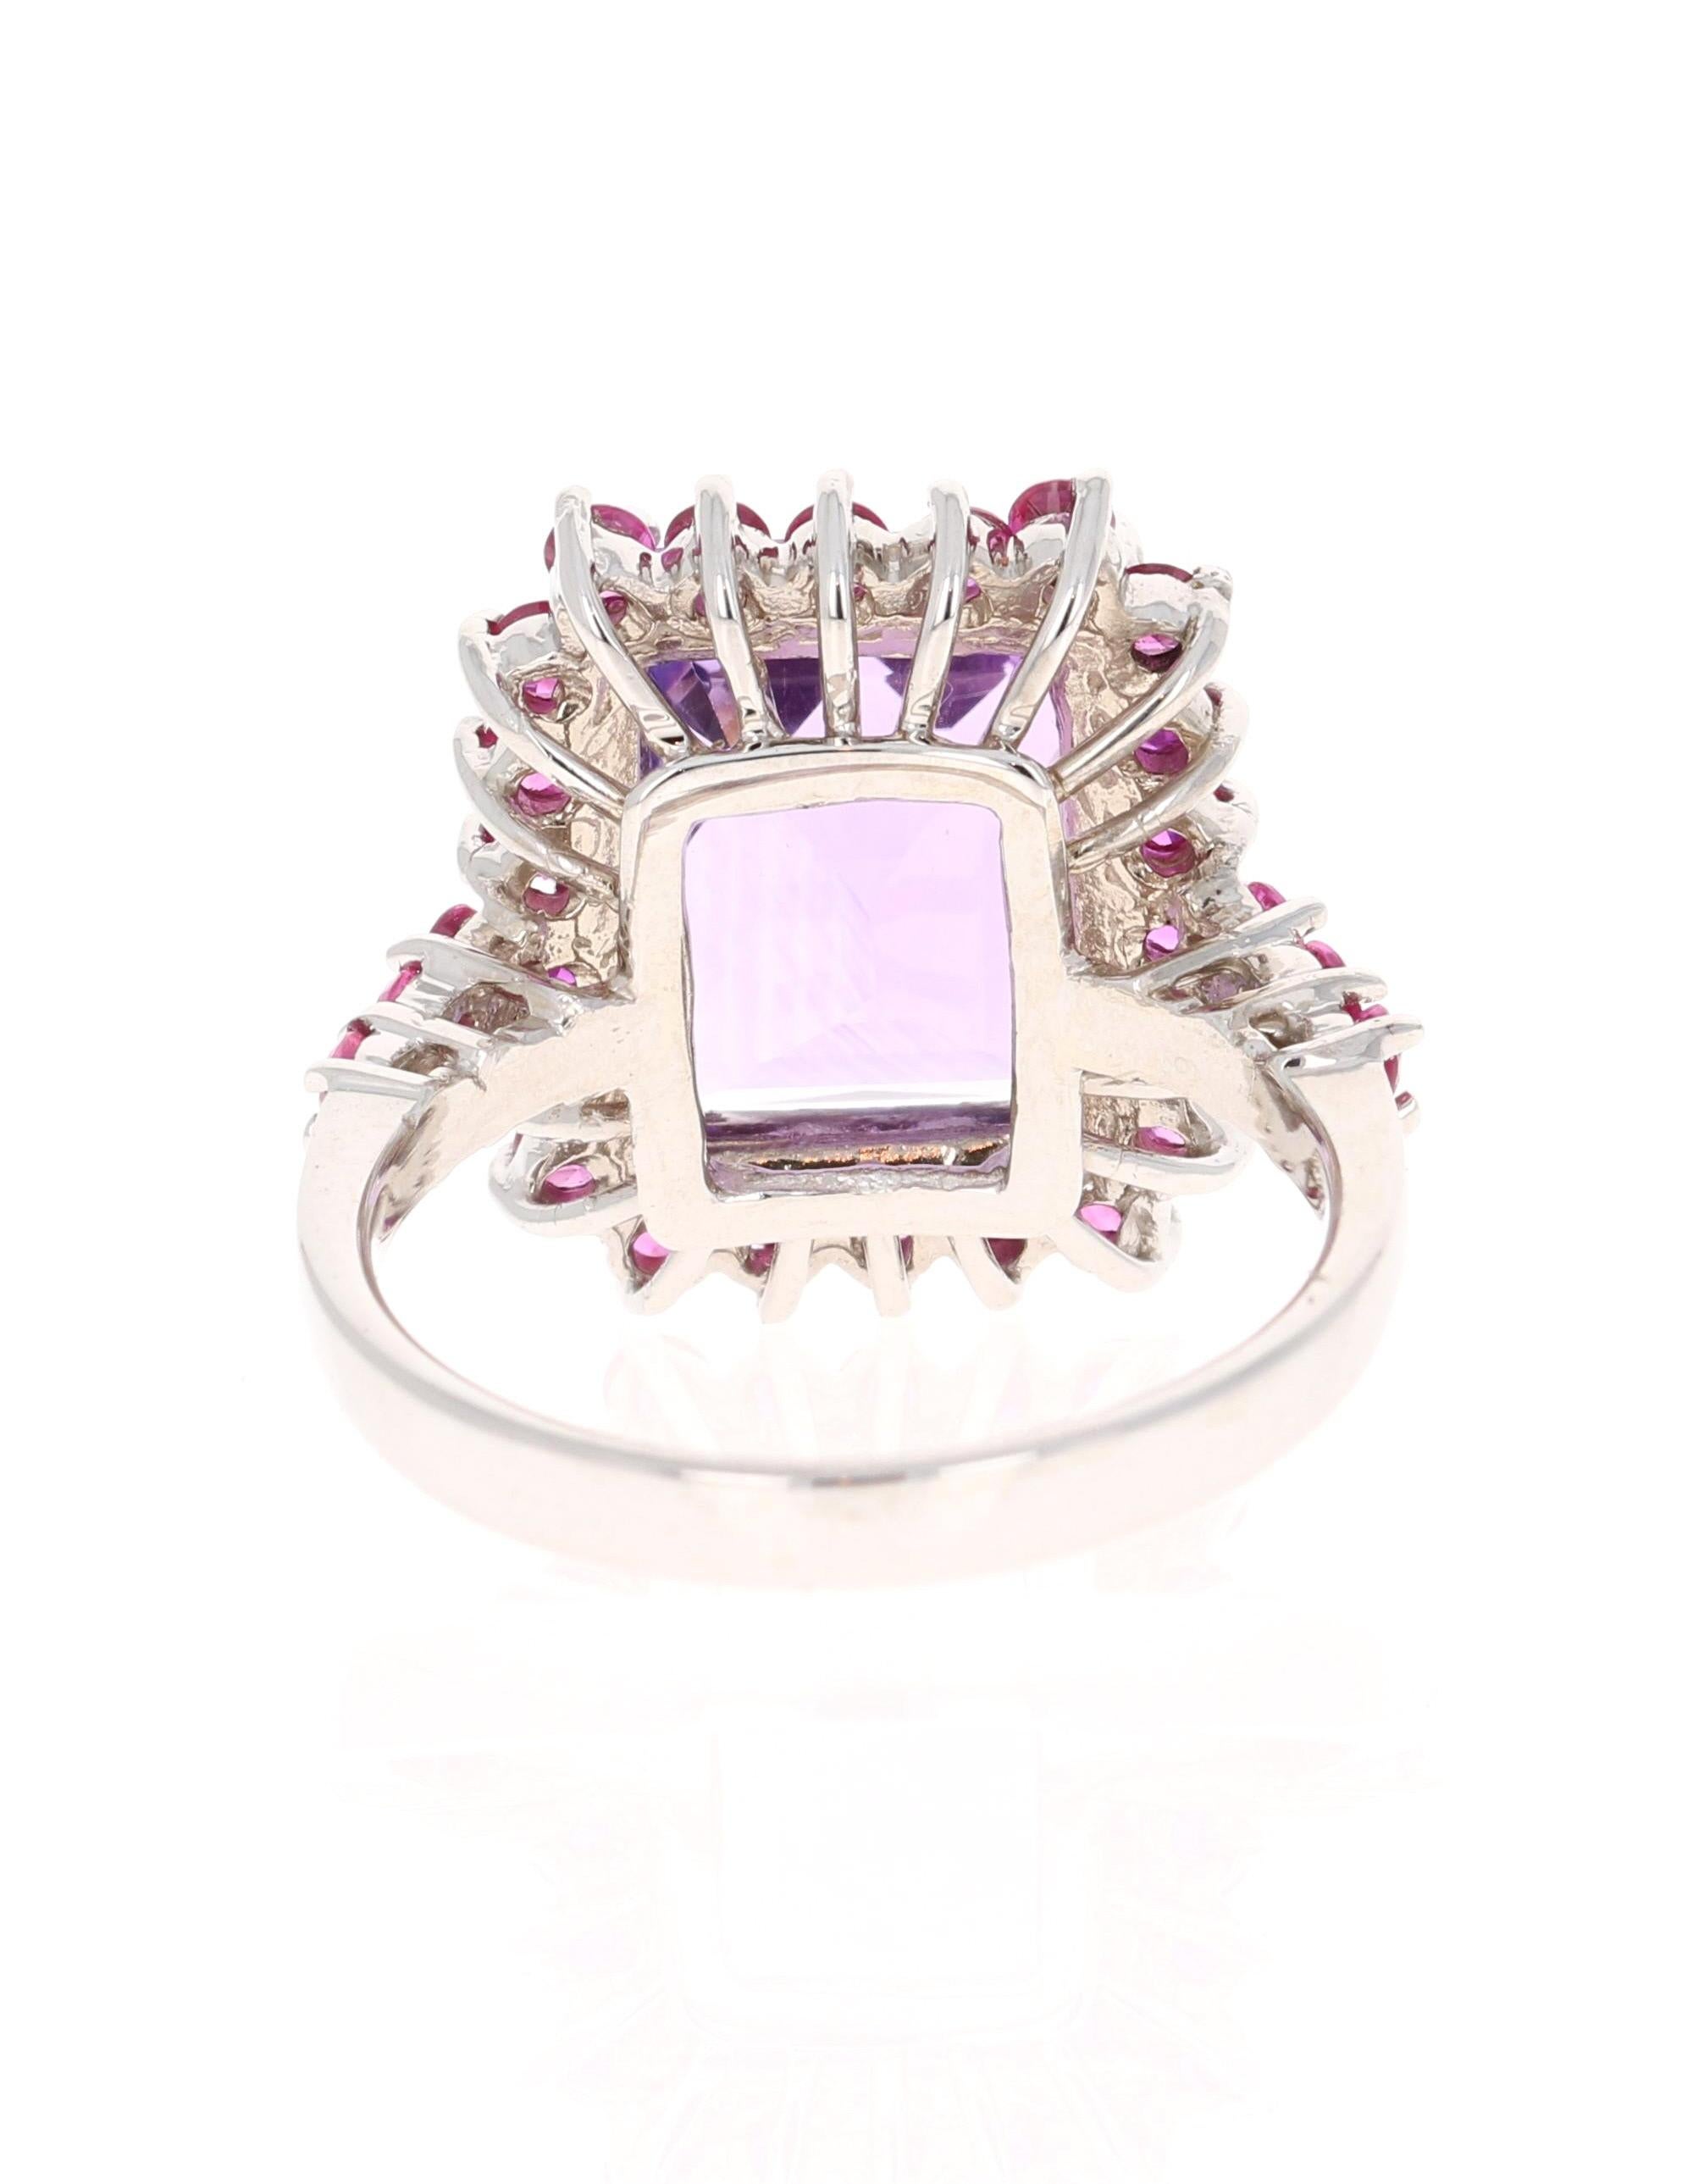 Contemporary 6.79 Carat Amethyst Pink Sapphire 14 Karat White Gold Ring